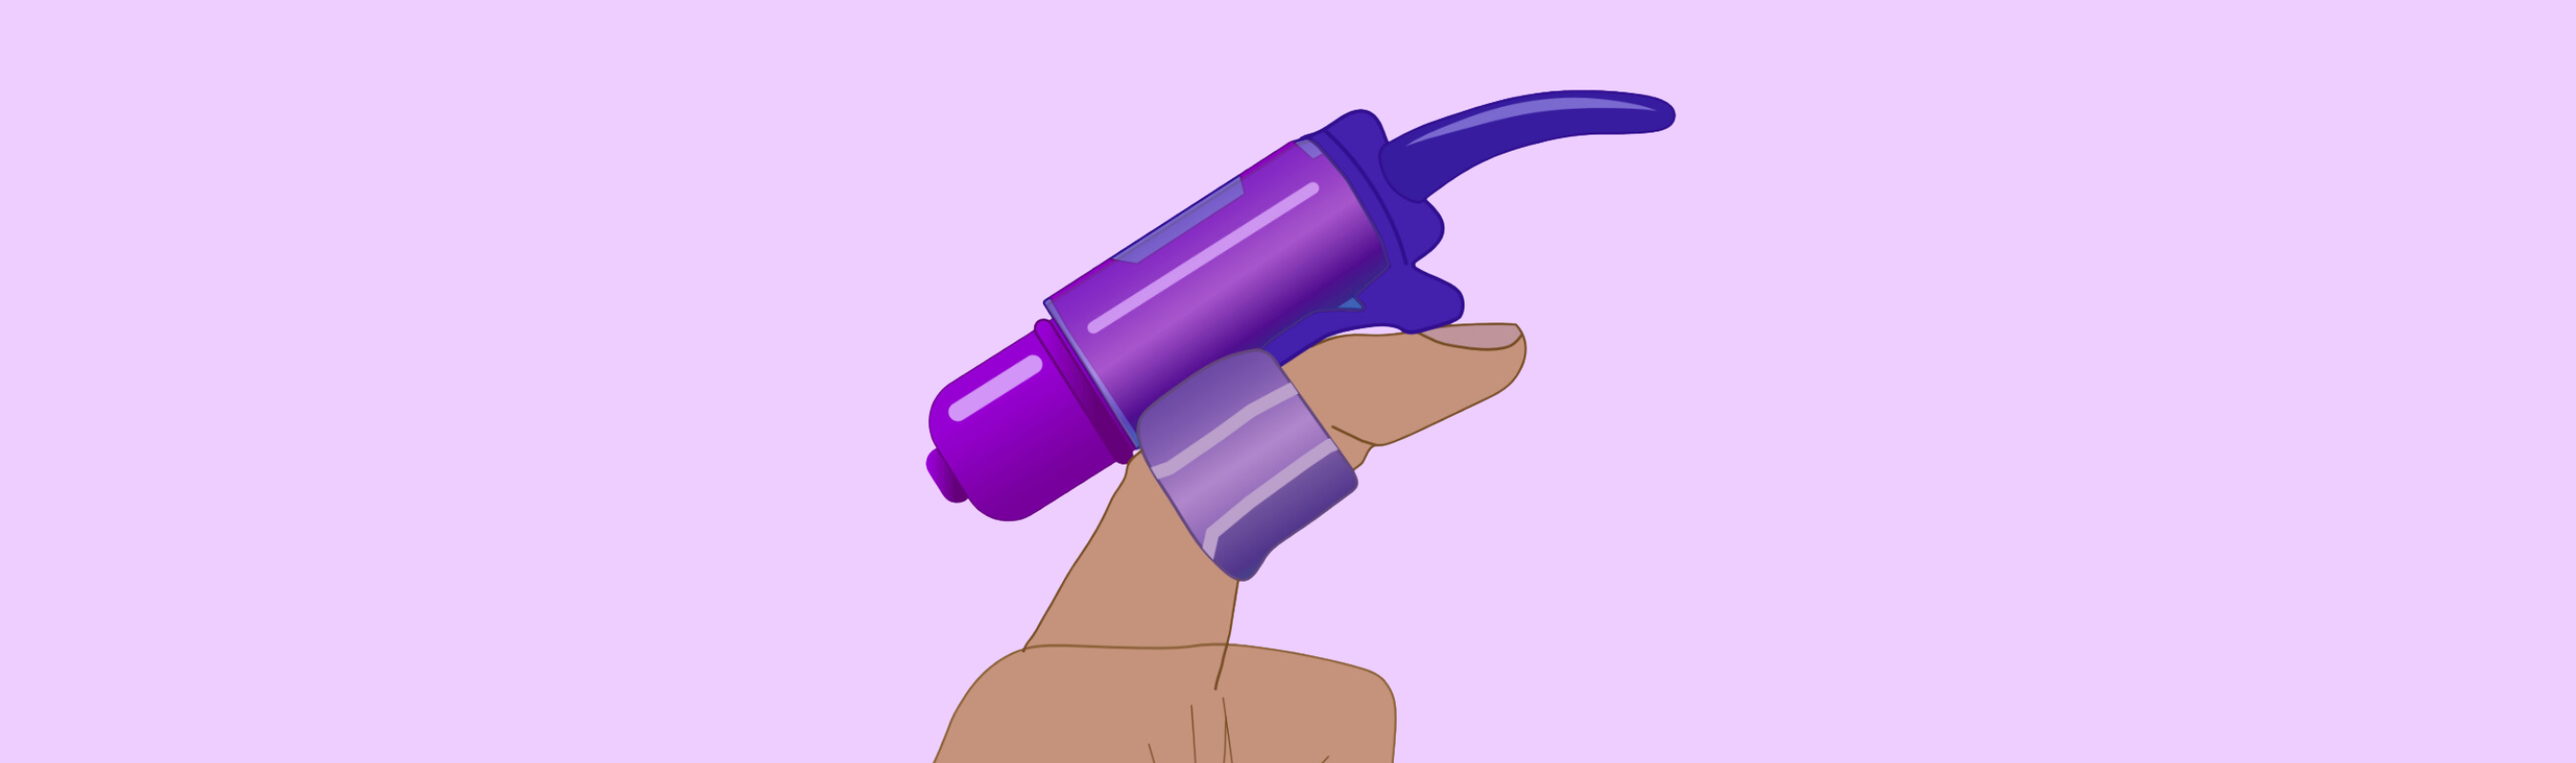 Illustration of purple finger vibrator on hand